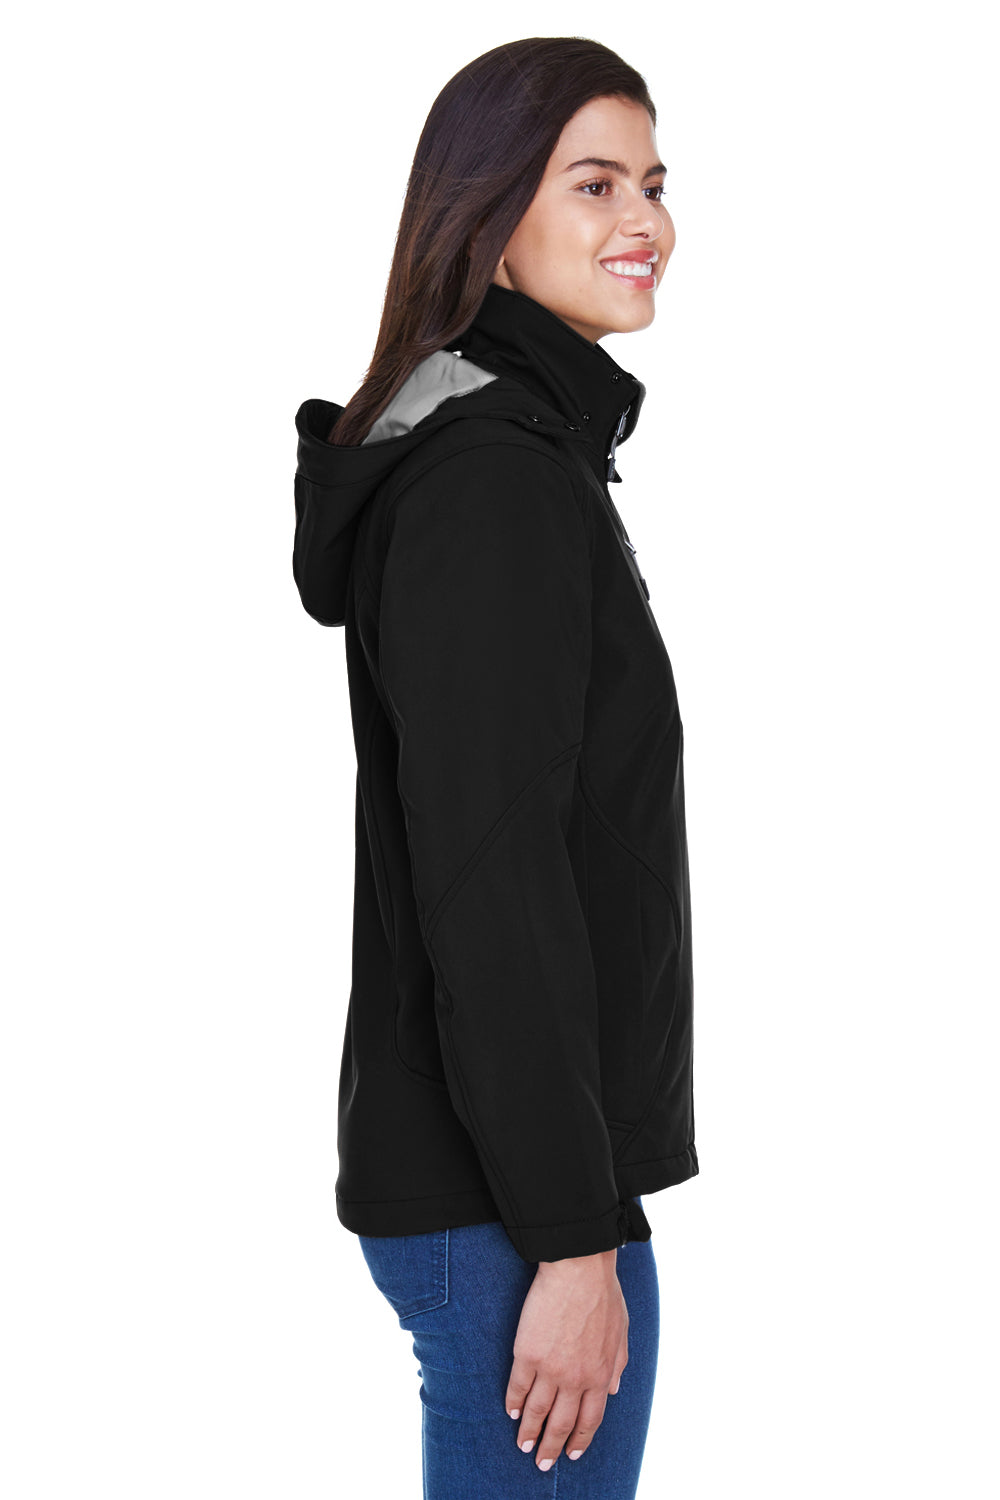 North End 78080 Womens Glacier Water Resistant Full Zip Hooded Jacket Black Side